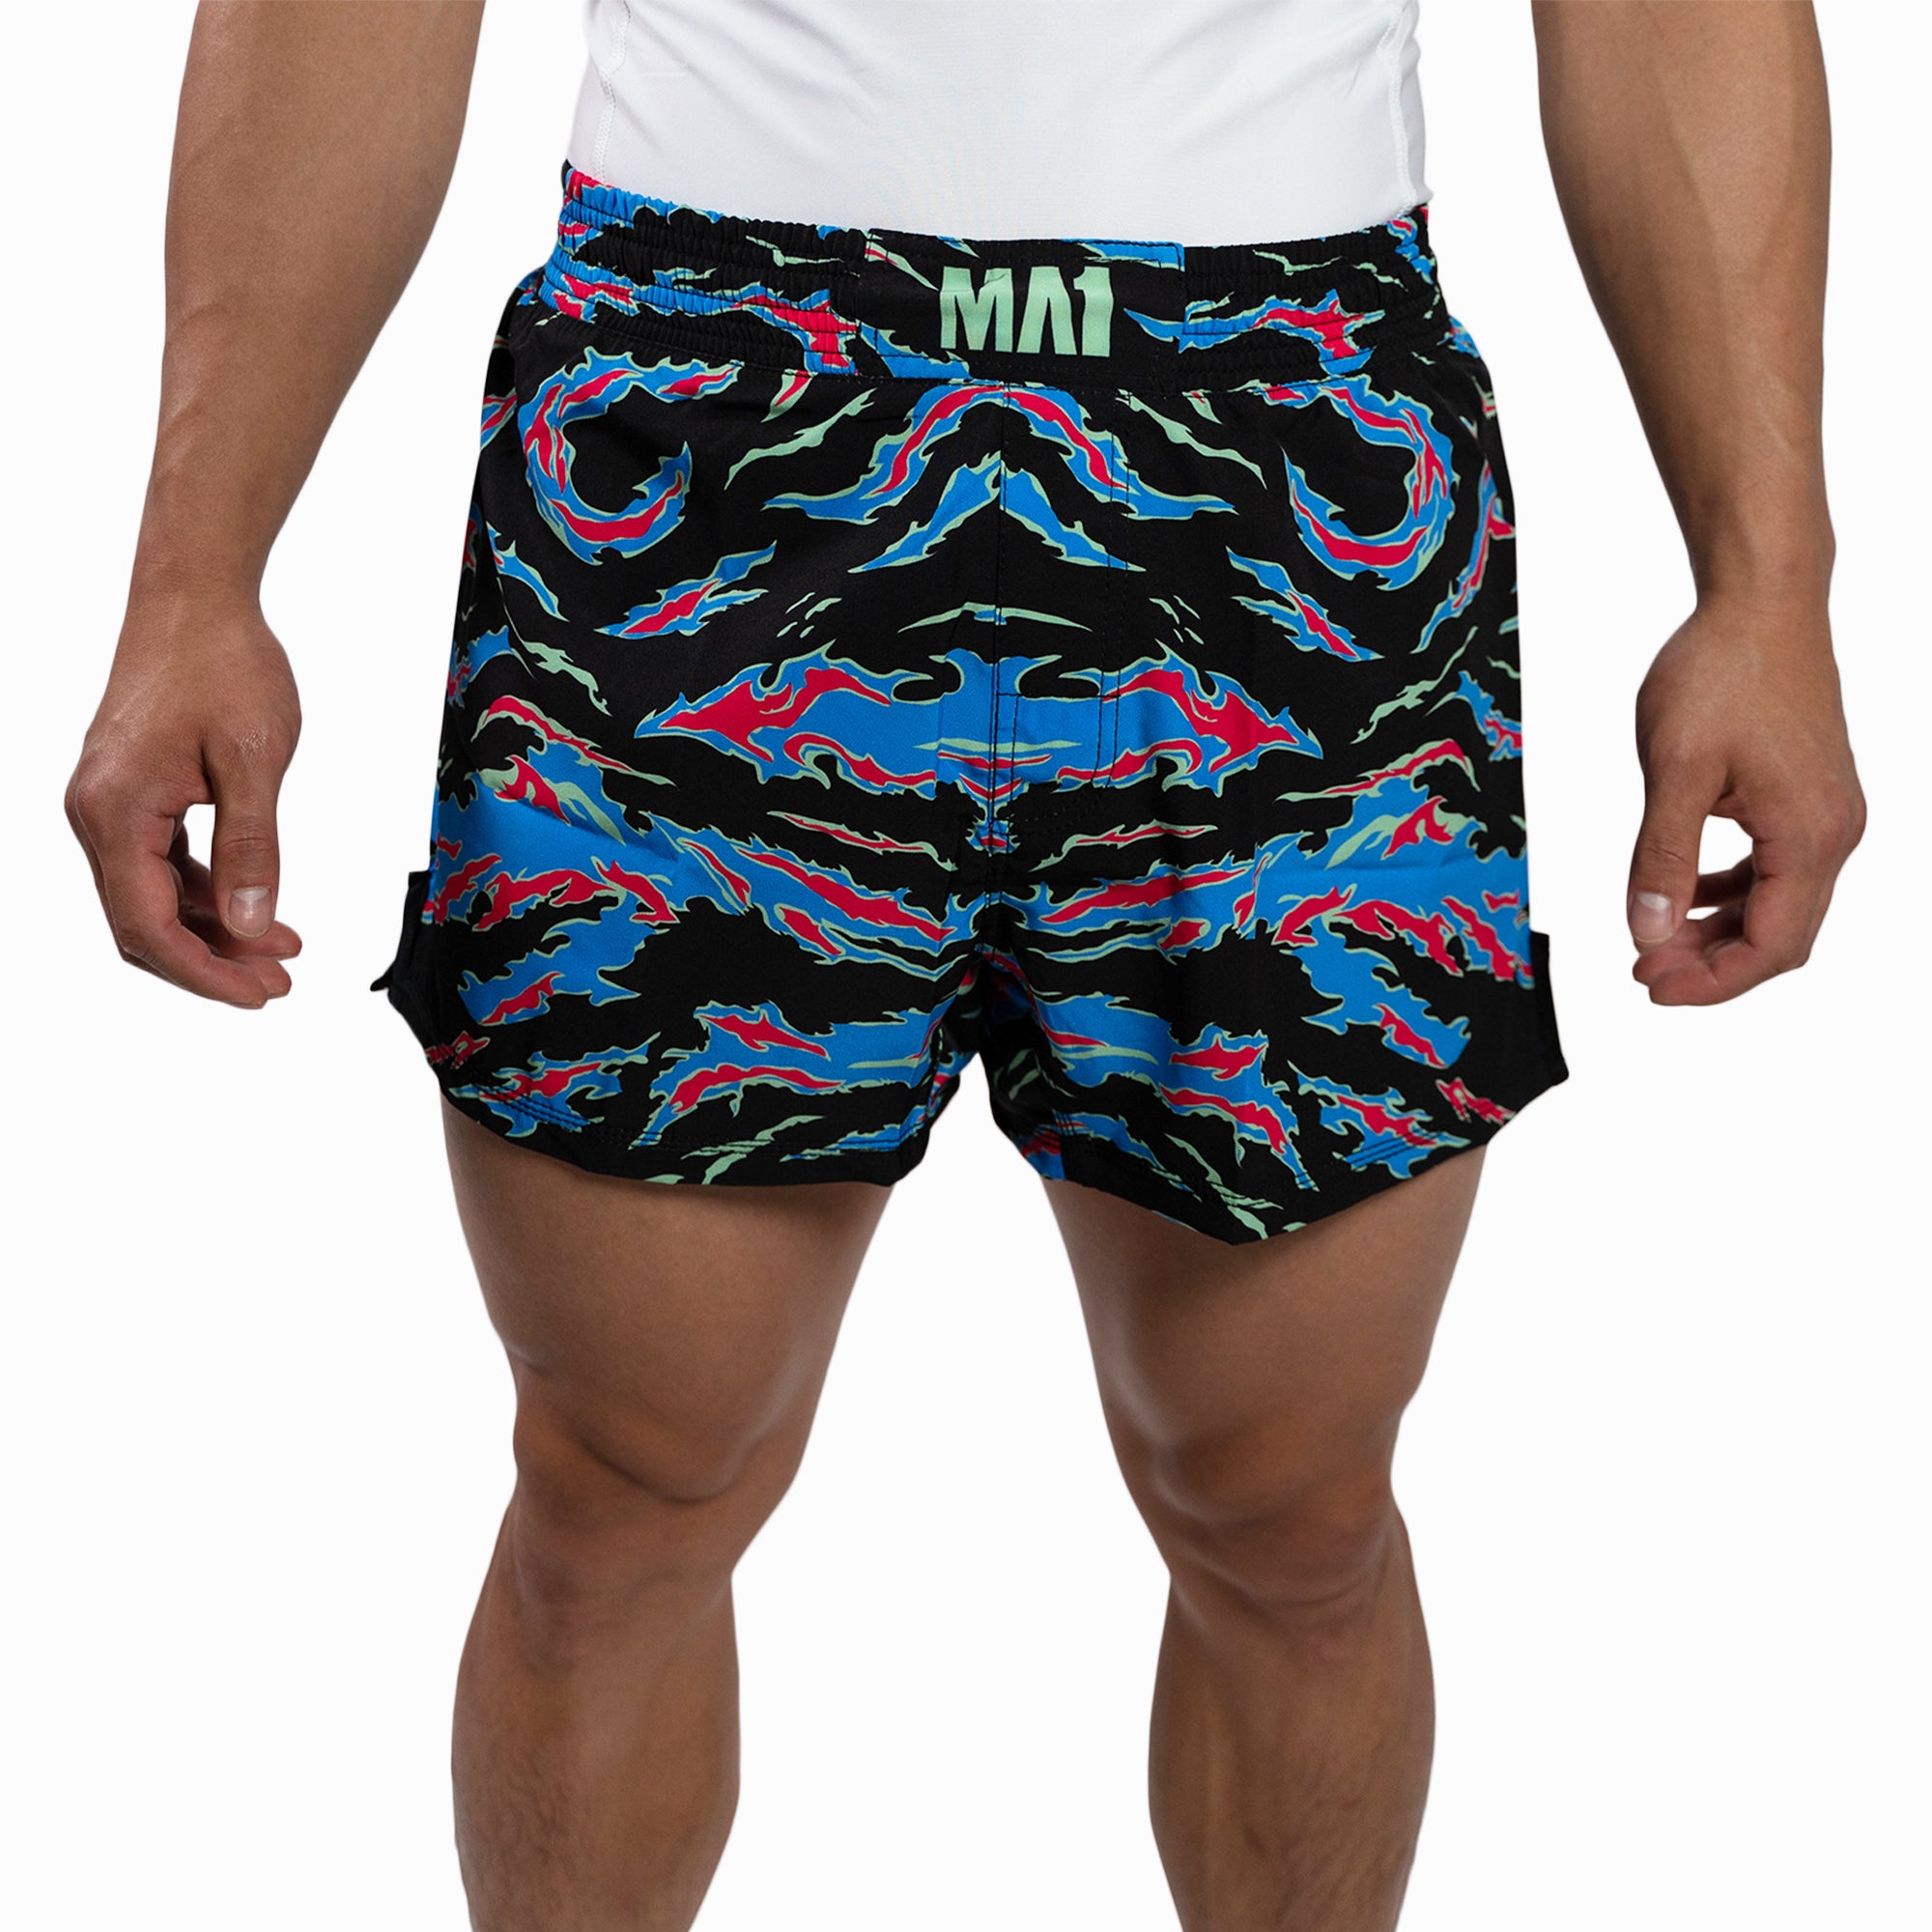 MA1 CAMO FIRE HIGH CUT MMA Shorts - Inspired by Craig Jones